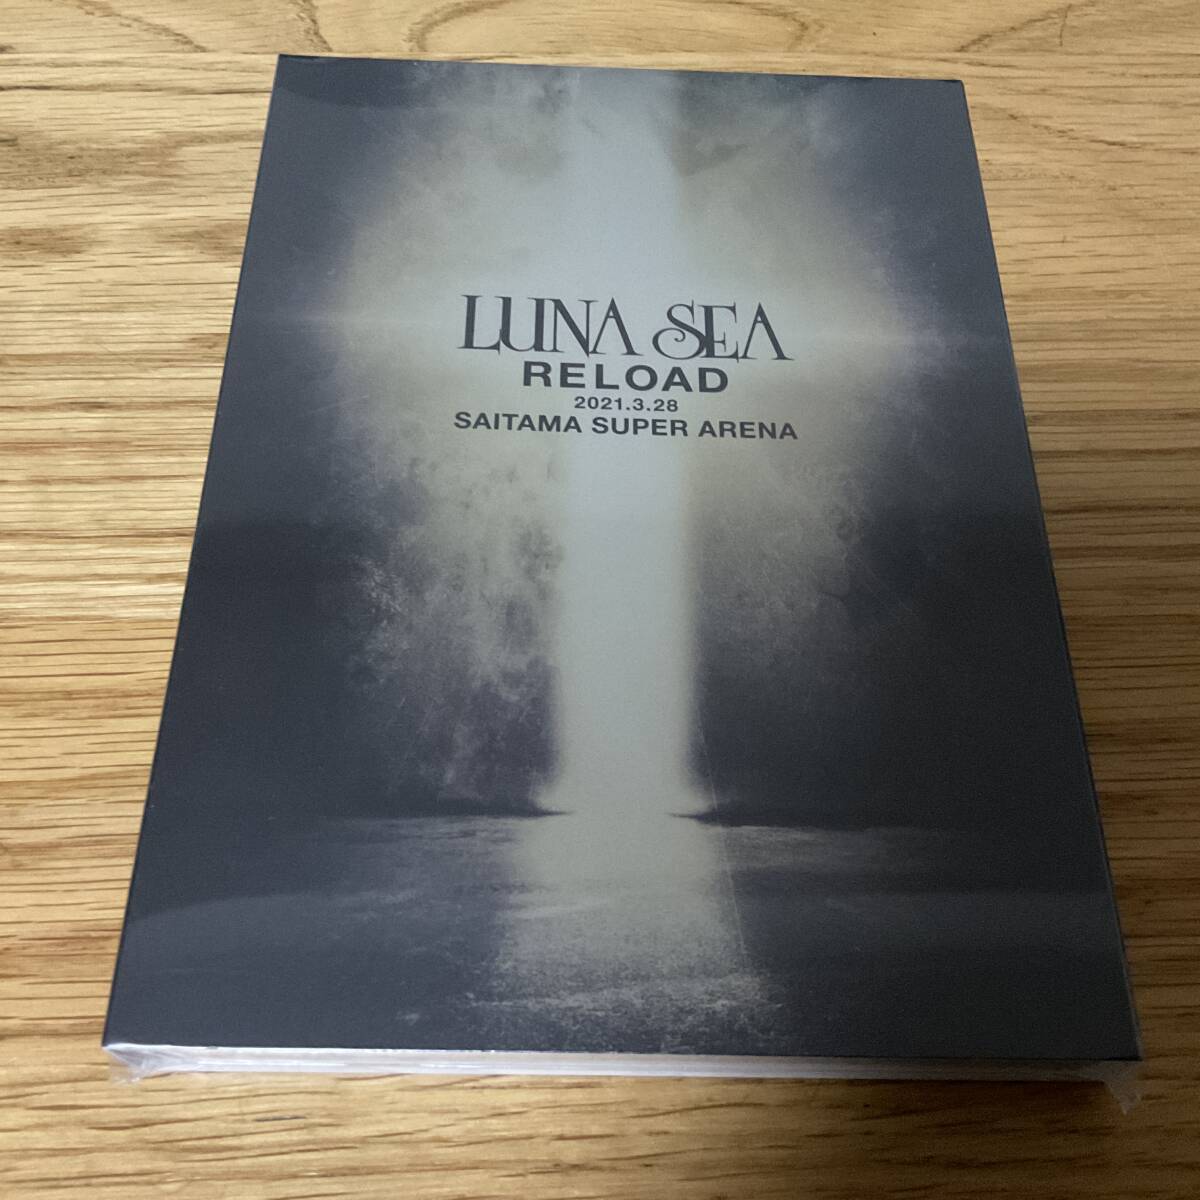 Blu-ray LUNA SEA RELOAD 2021.3.28 SAITAMA SUPER ARENA 未開封の画像1